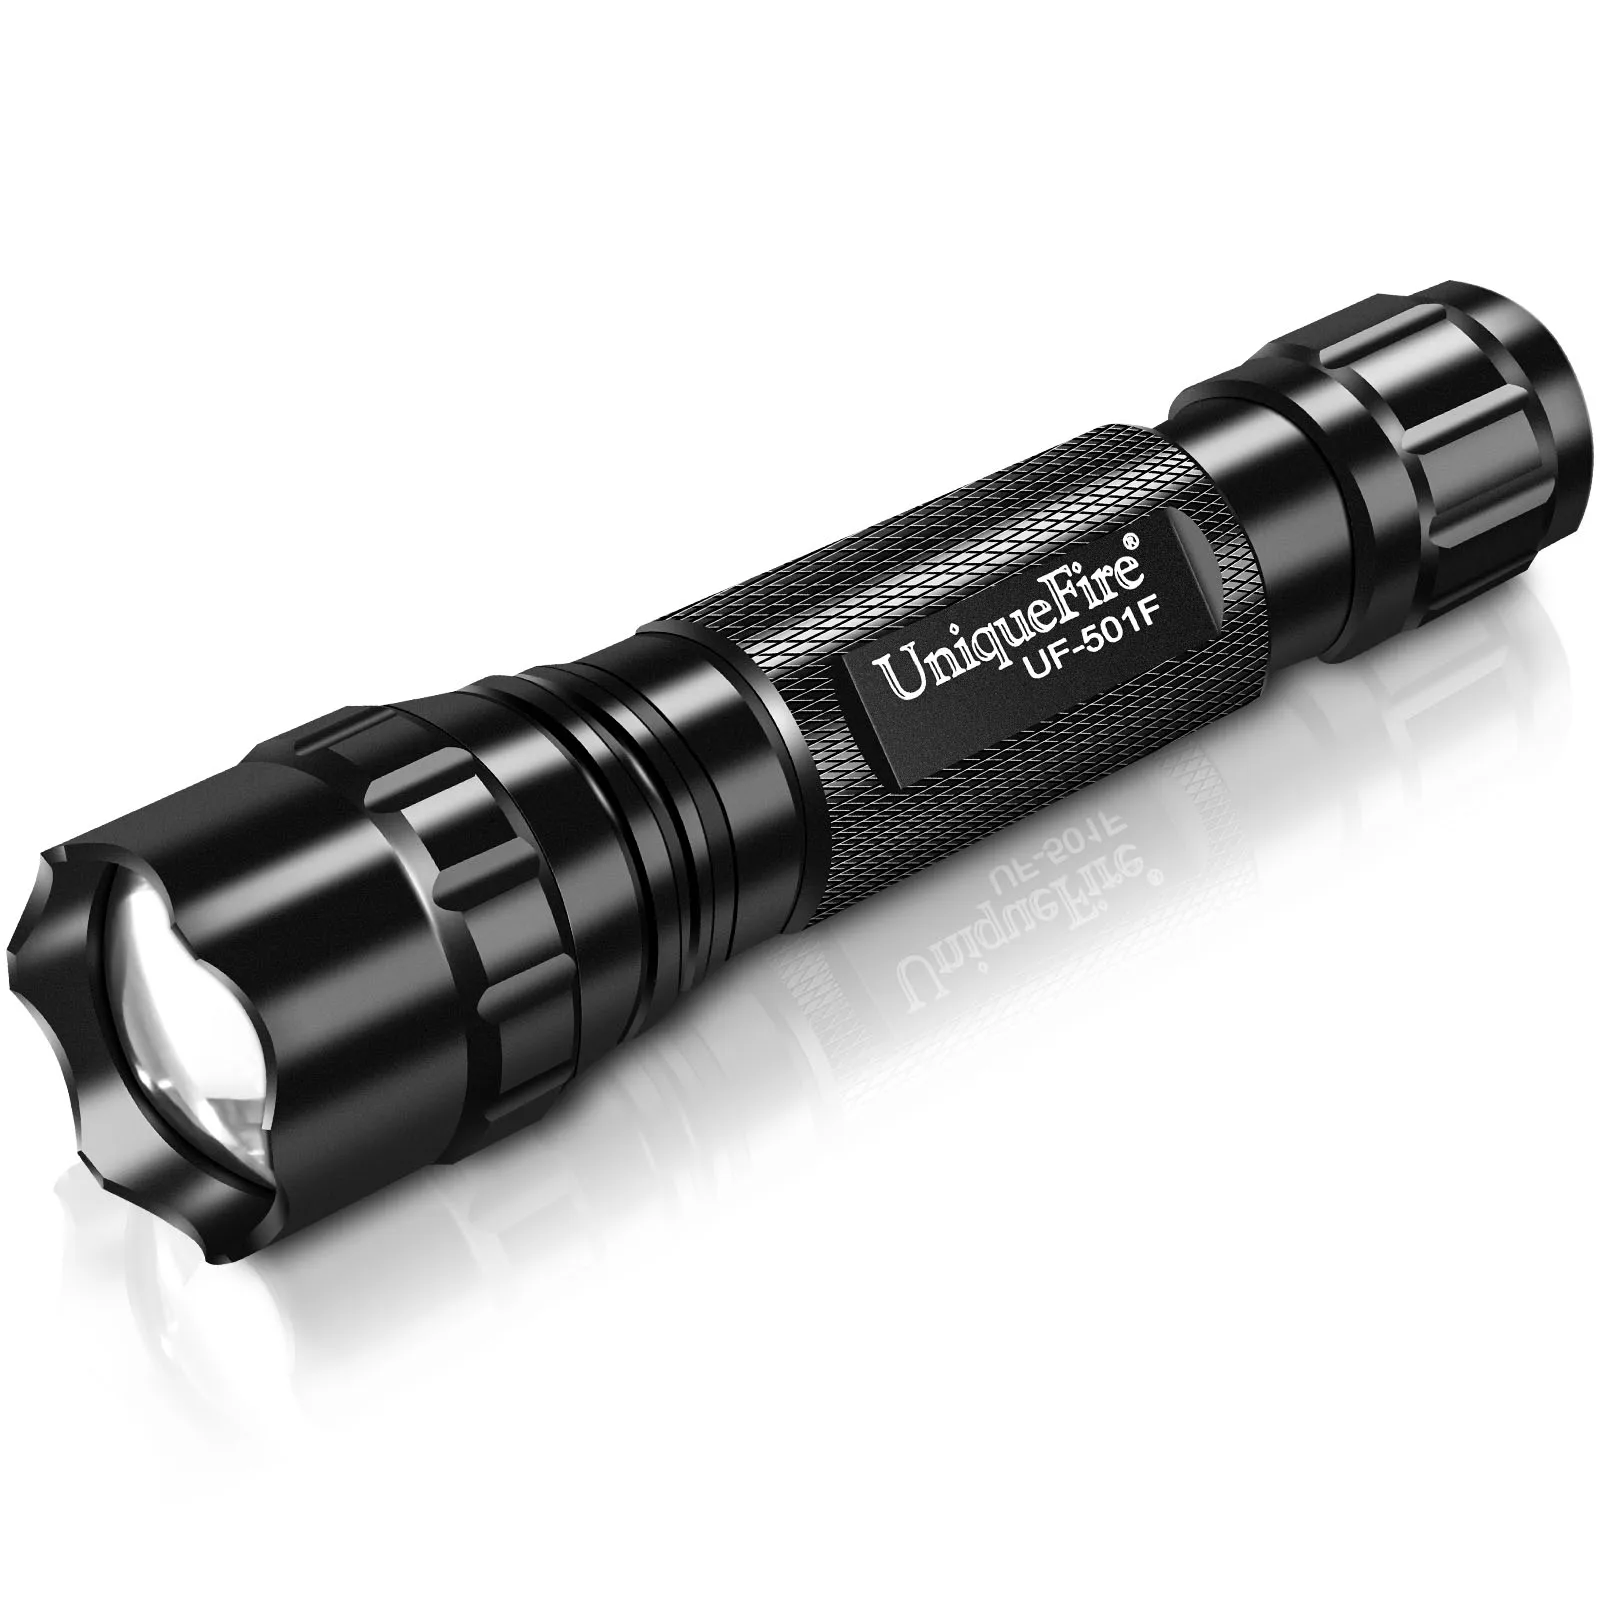 

UniqueFire XML T6 LED Mini Handheld Tactical Flashlight 1200LM 5 Modes Portable Pocket Torch Adjustable Focus Zoom Light Lamp